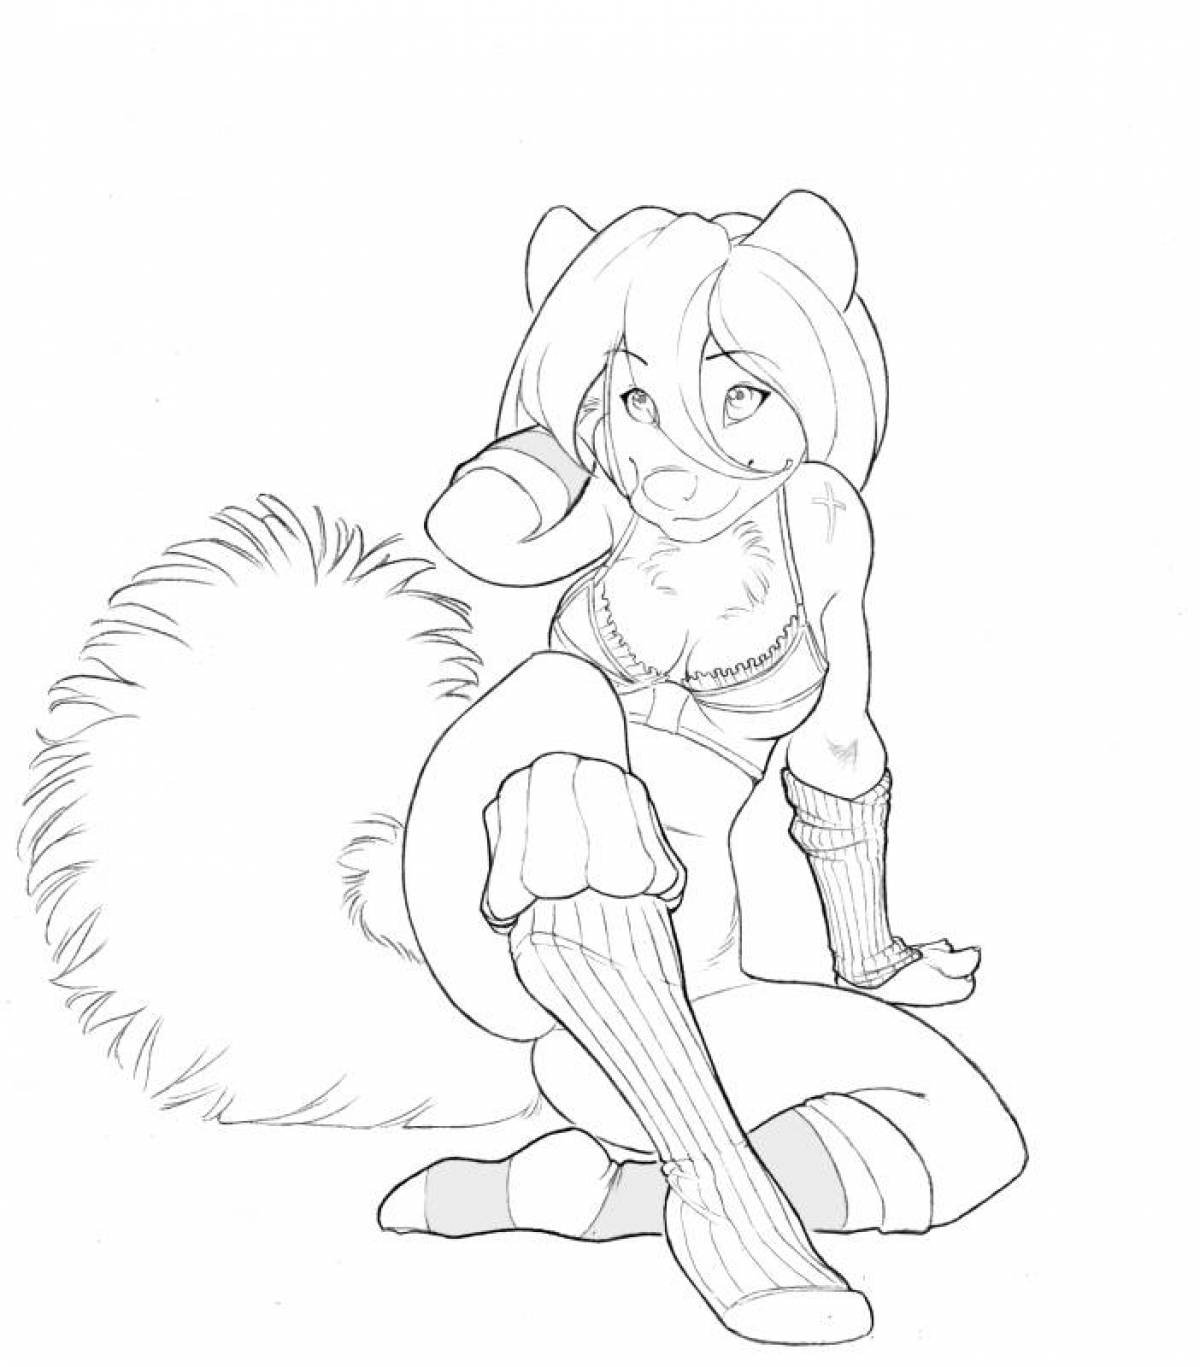 Furry sitting